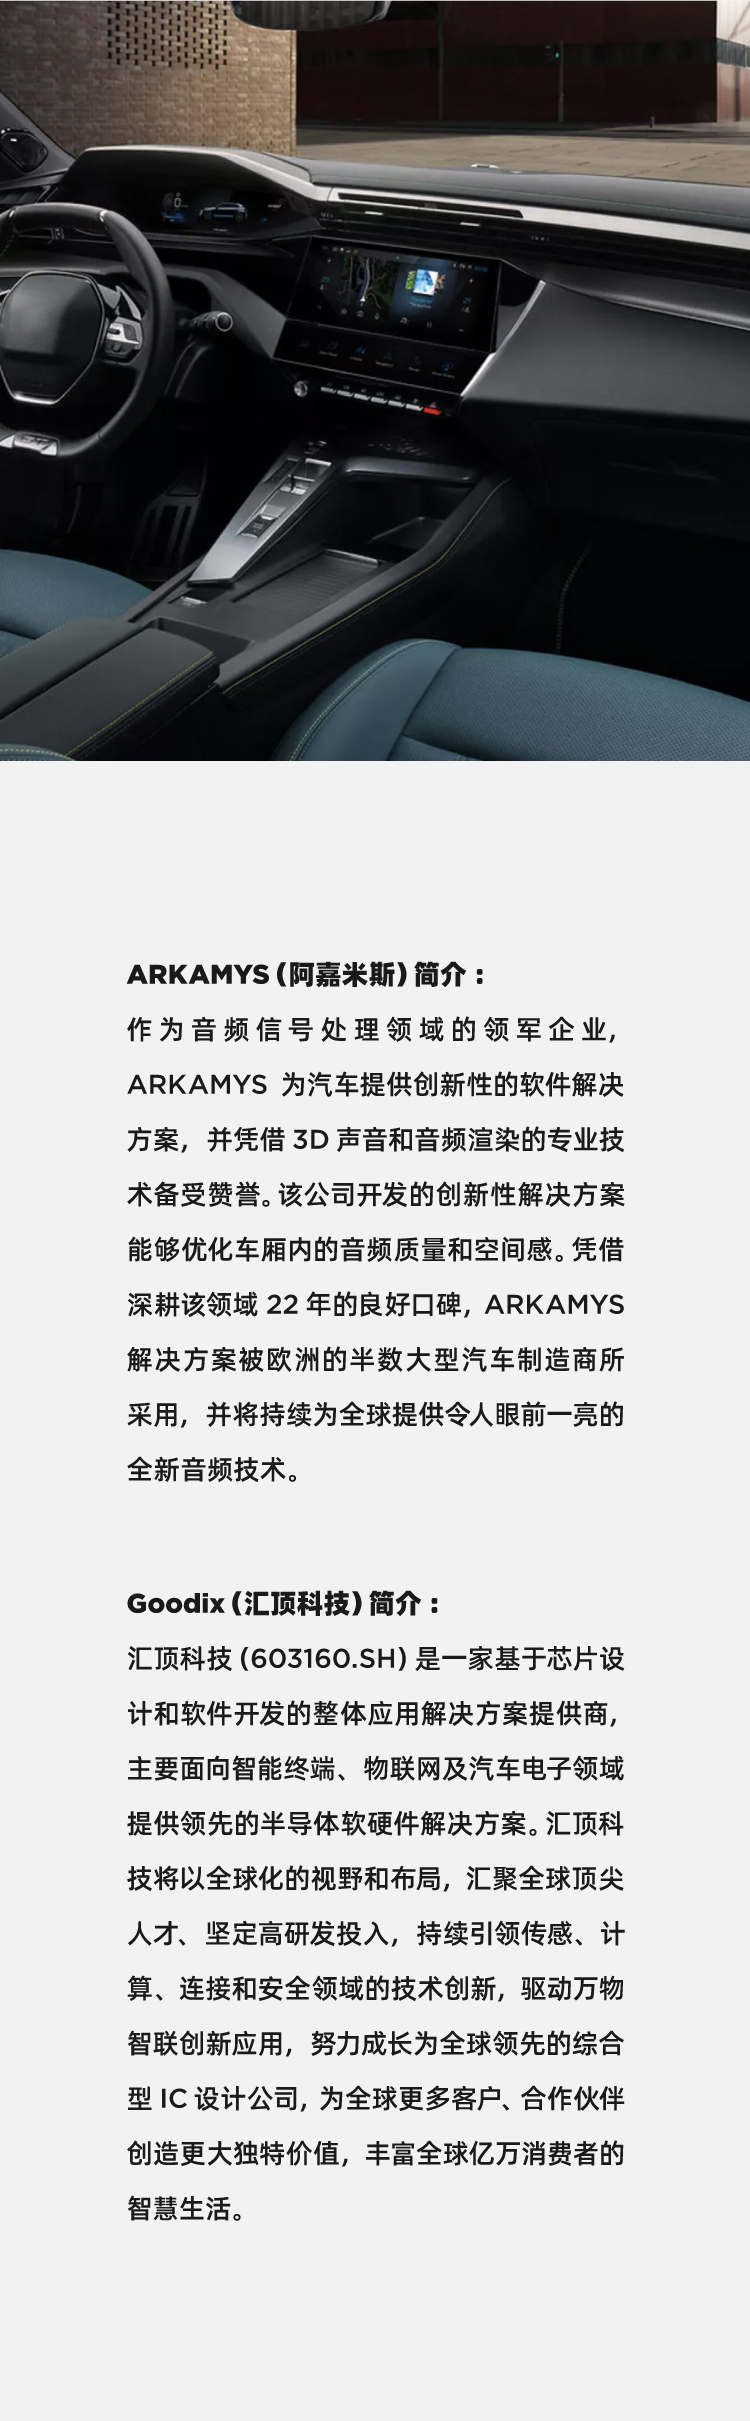 Arkamys_NXP_Goodix_PR_CN_Version3_06.jpg